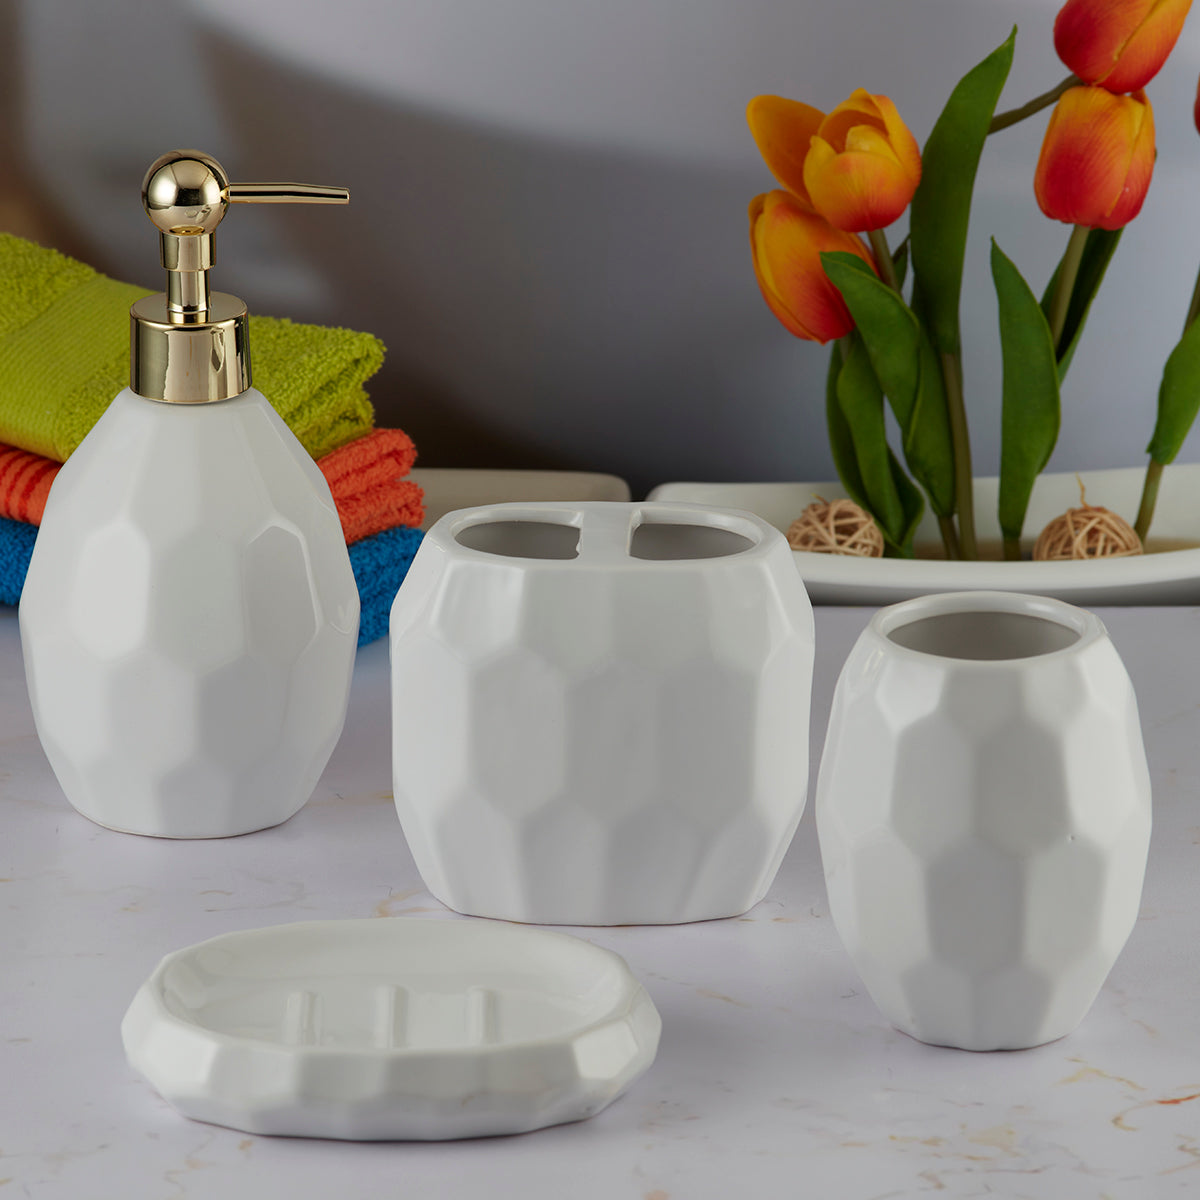 Ceramic Bathroom Accessories Set of 4 Bath Set with Soap Dispenser (5761)